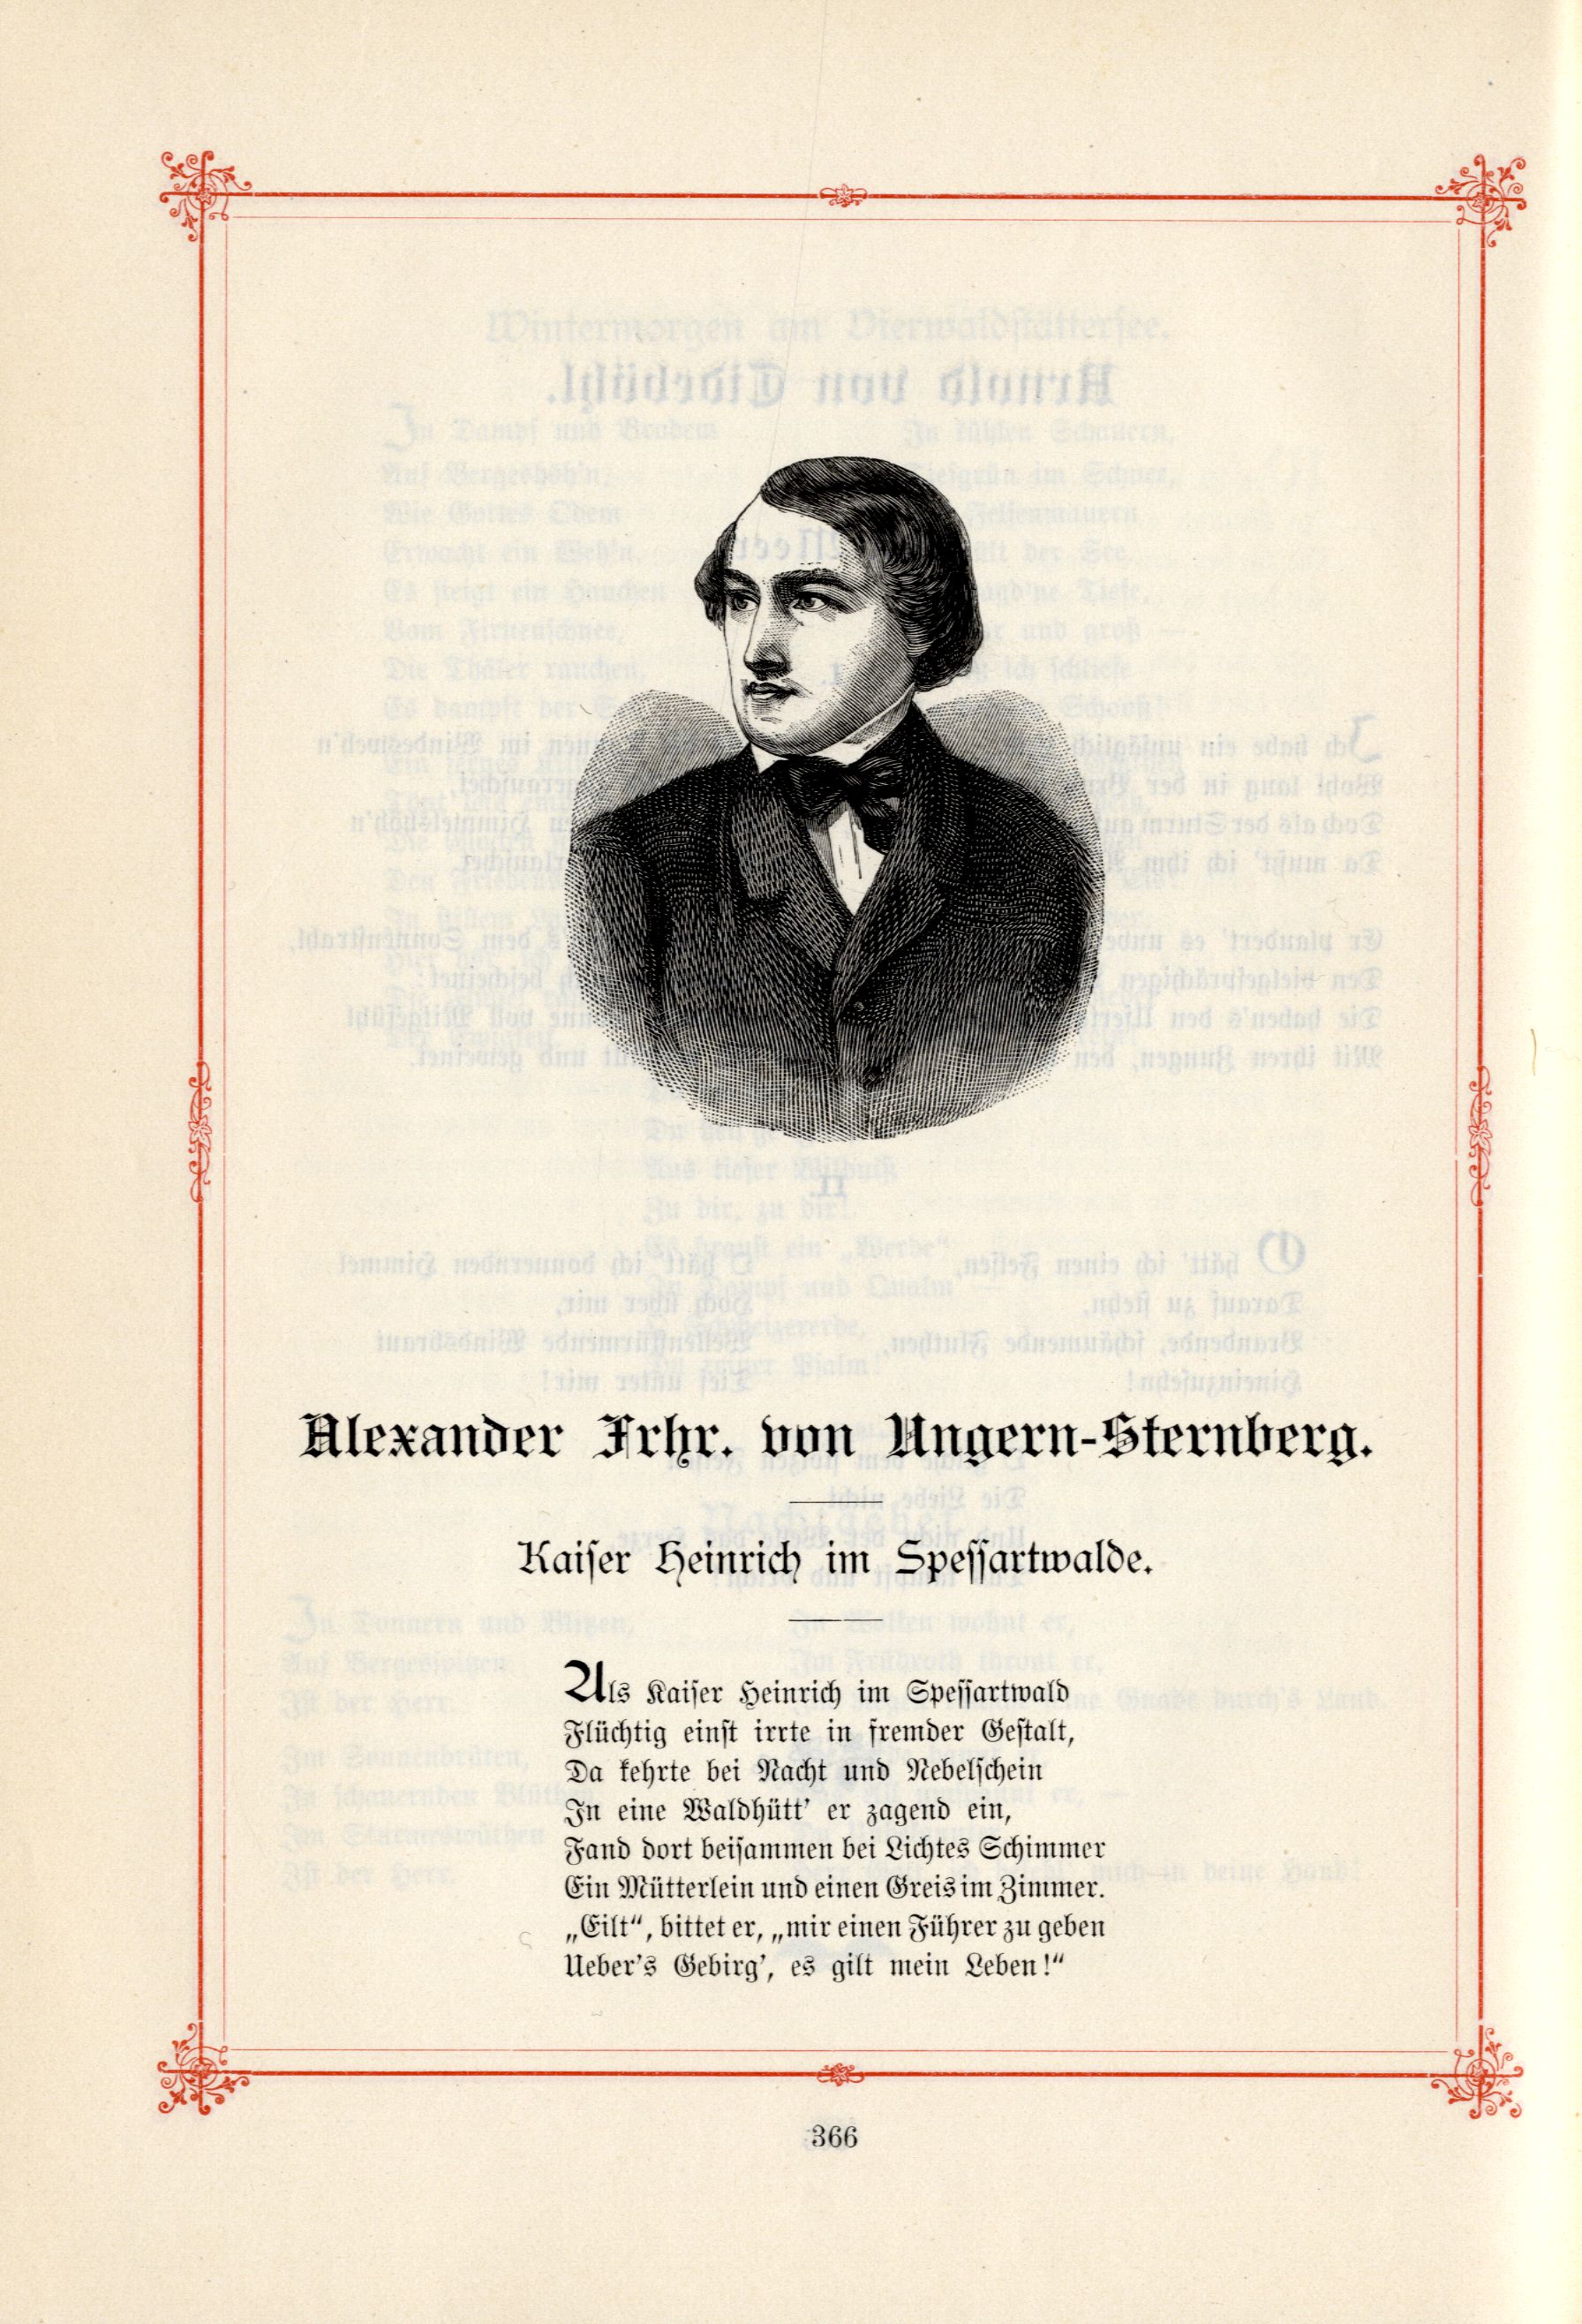 Kaiser Heinrich im Spessartwalde. (1895) | 1. (366) Основной текст